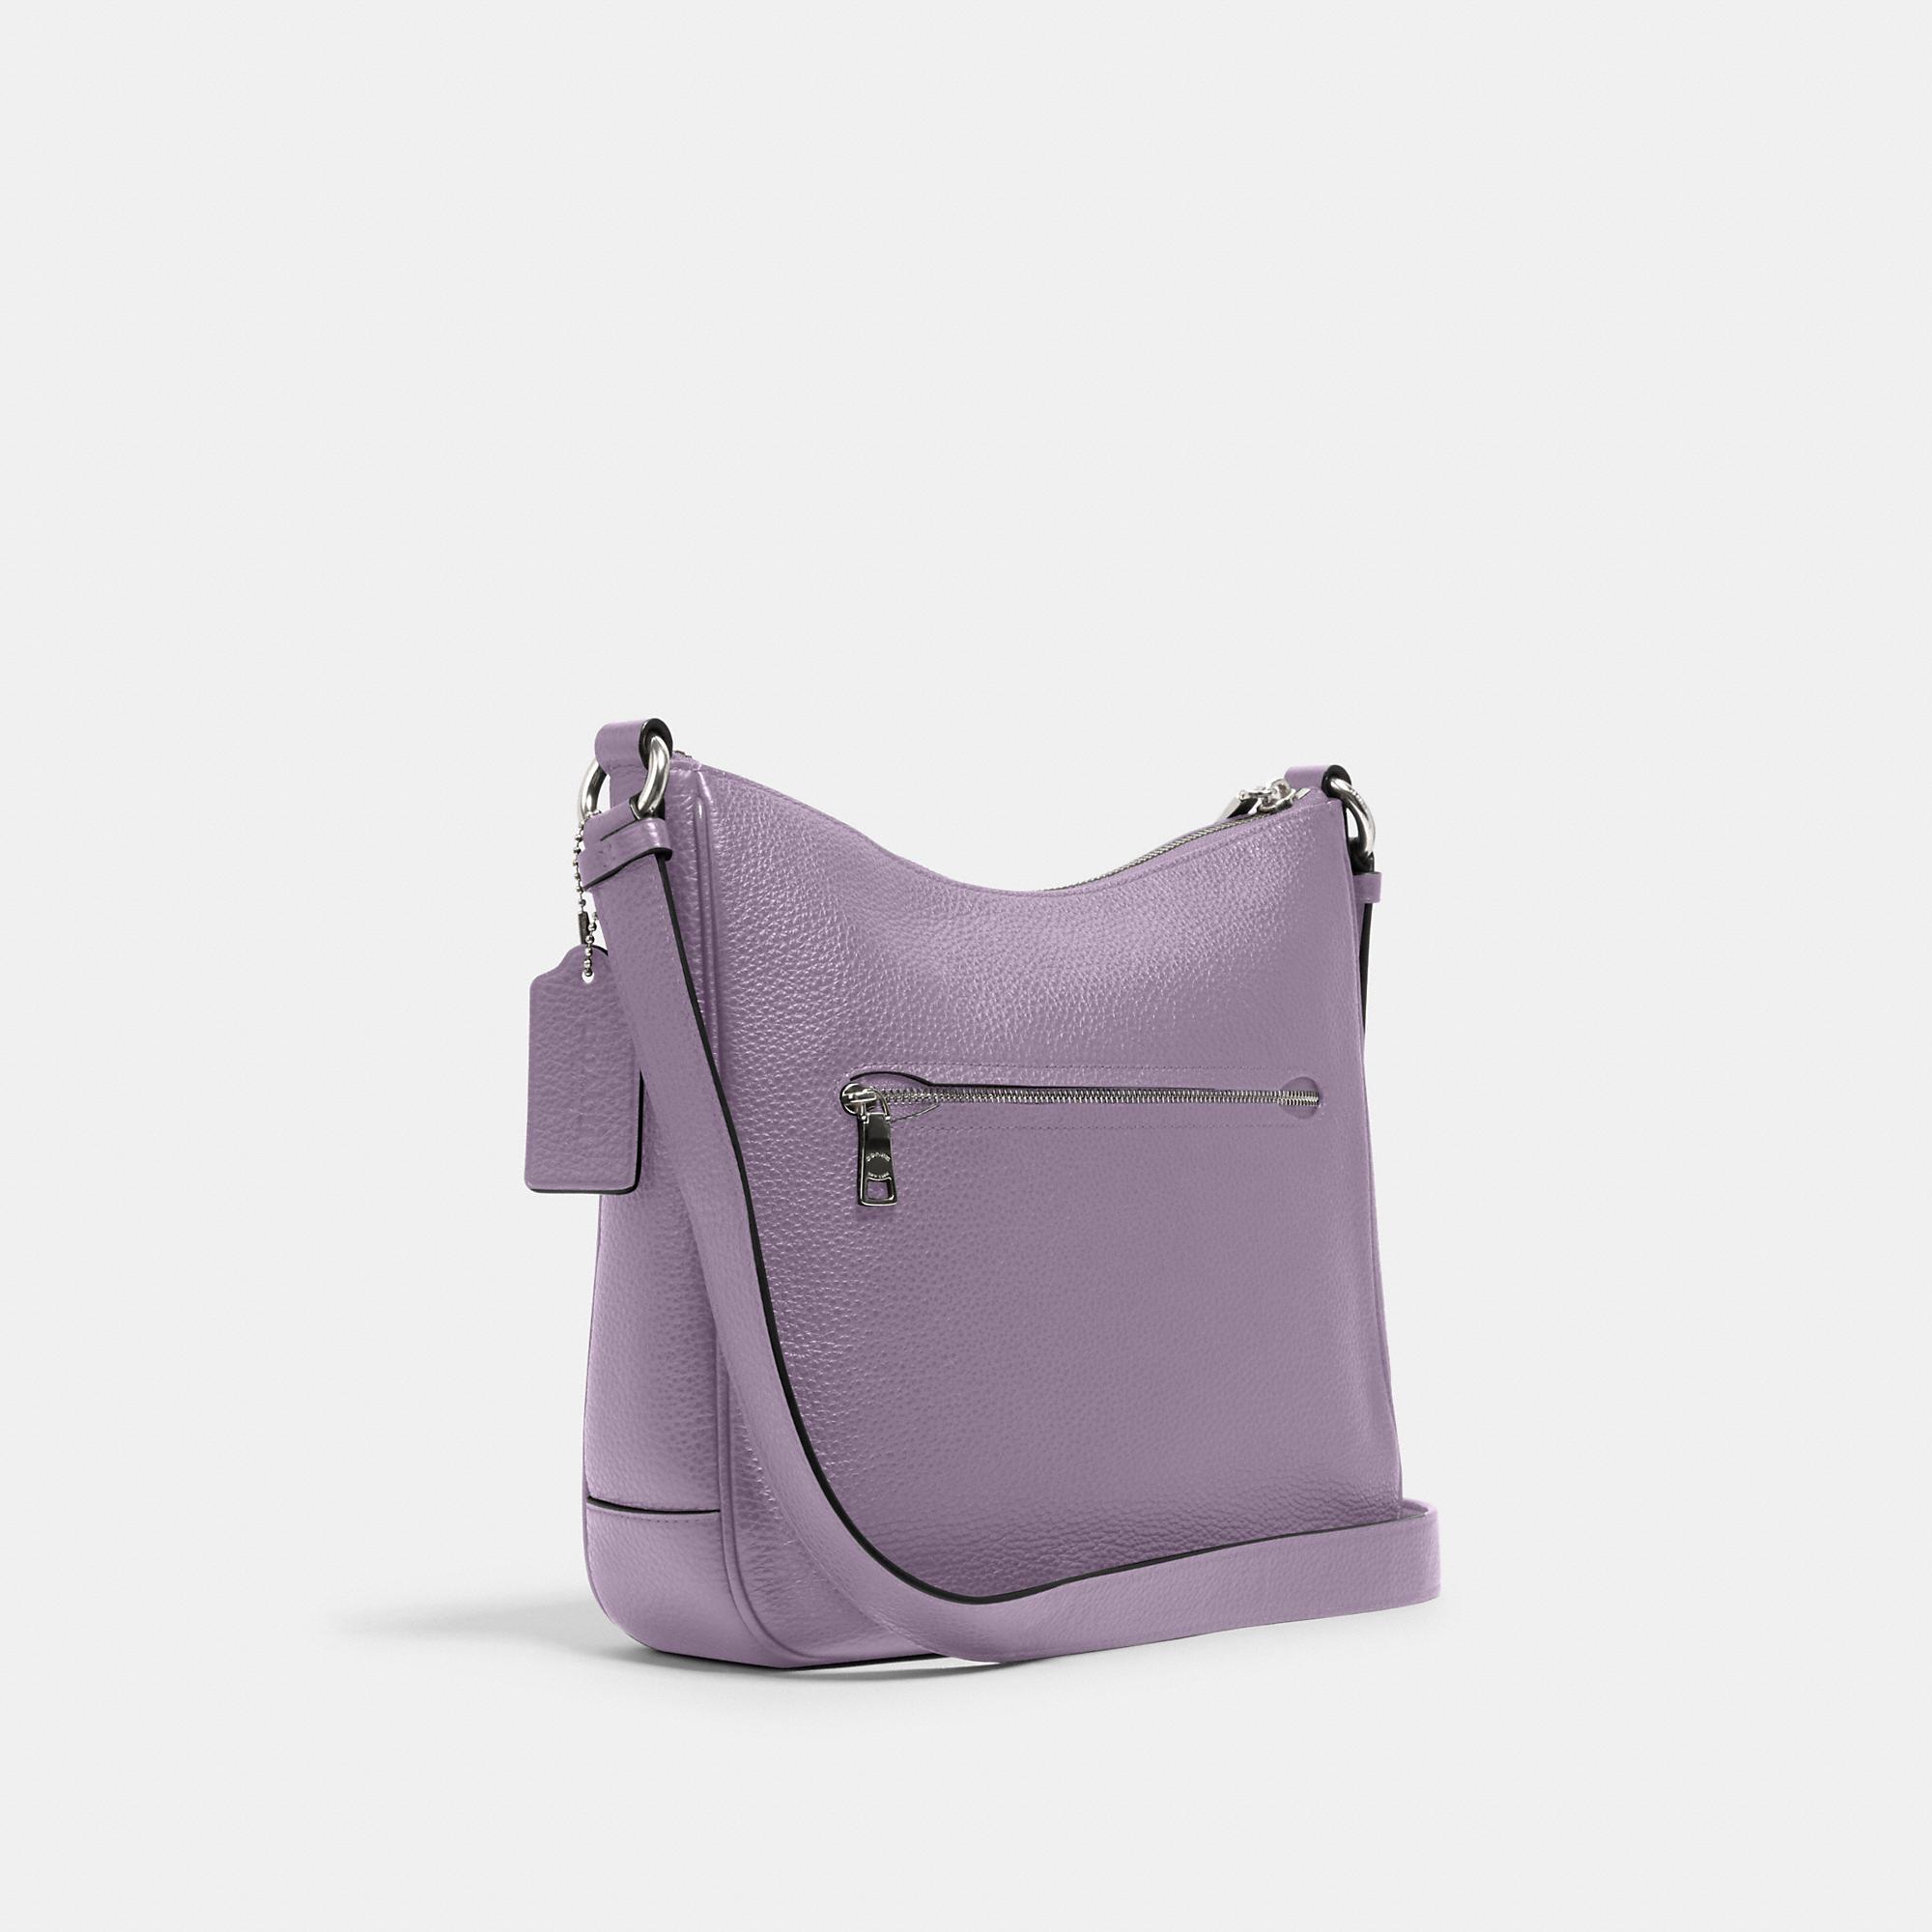 COACH Violet Ocelot Tote Purse Handbag Brown/Black/Purple NWT $268 F25282 |  #1692800248